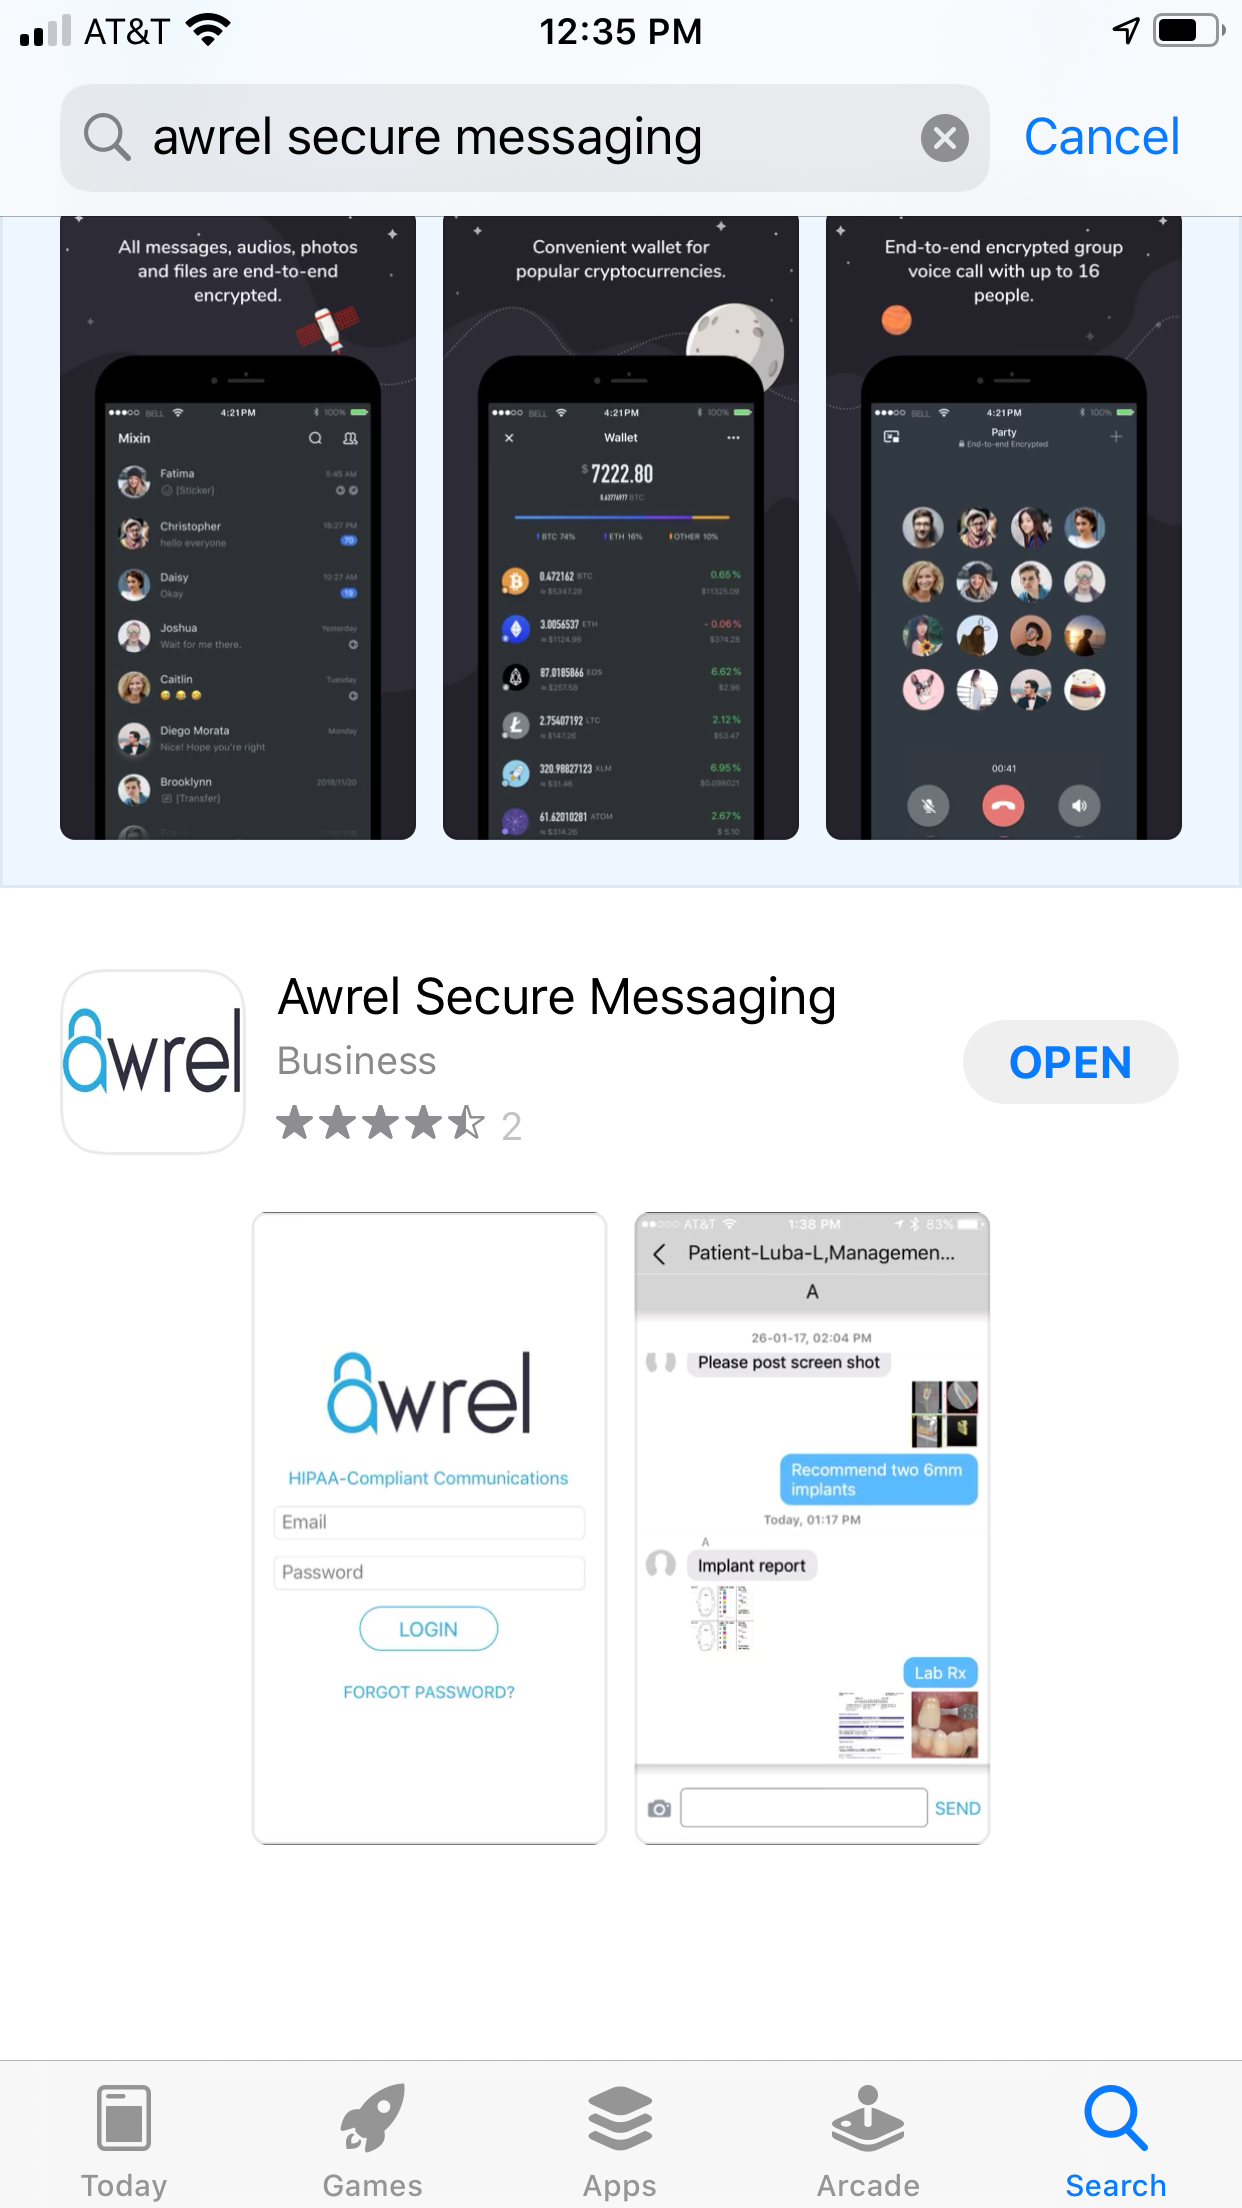 The Awrel app